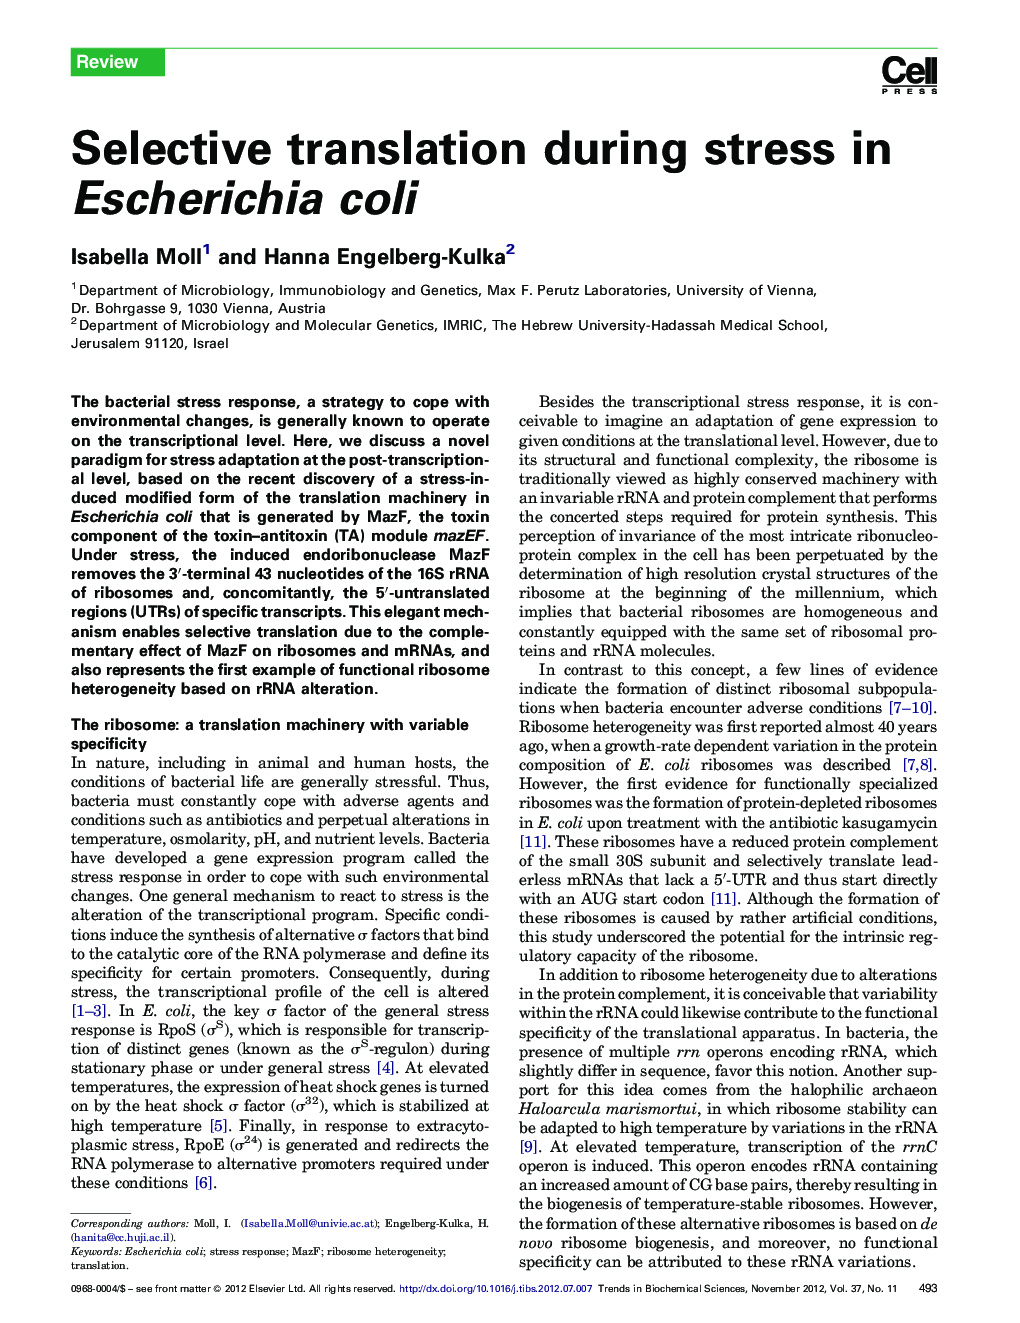 Selective translation during stress in Escherichia coli